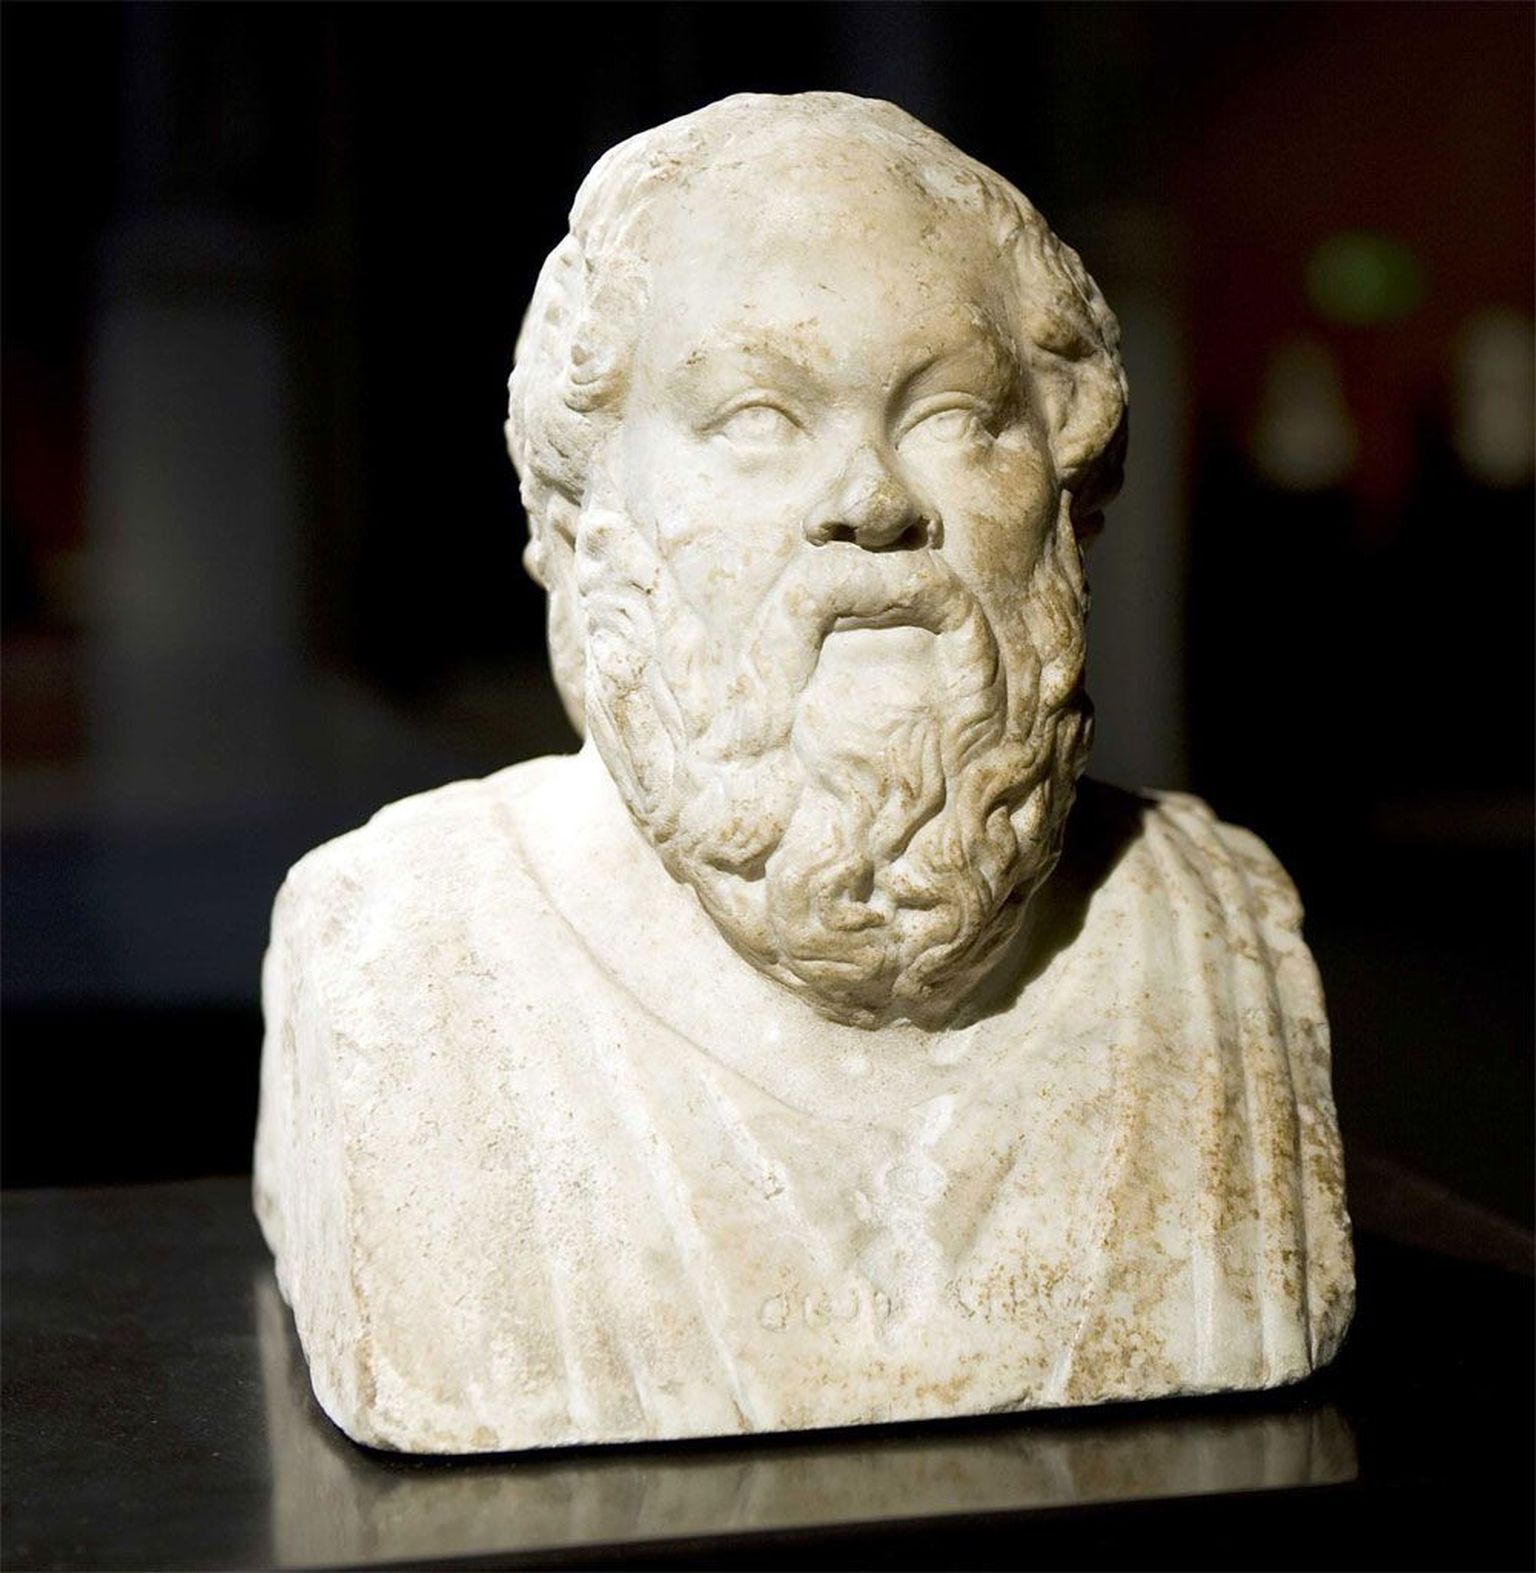 Vana-Kreeka õpetlase Sokratese büst.